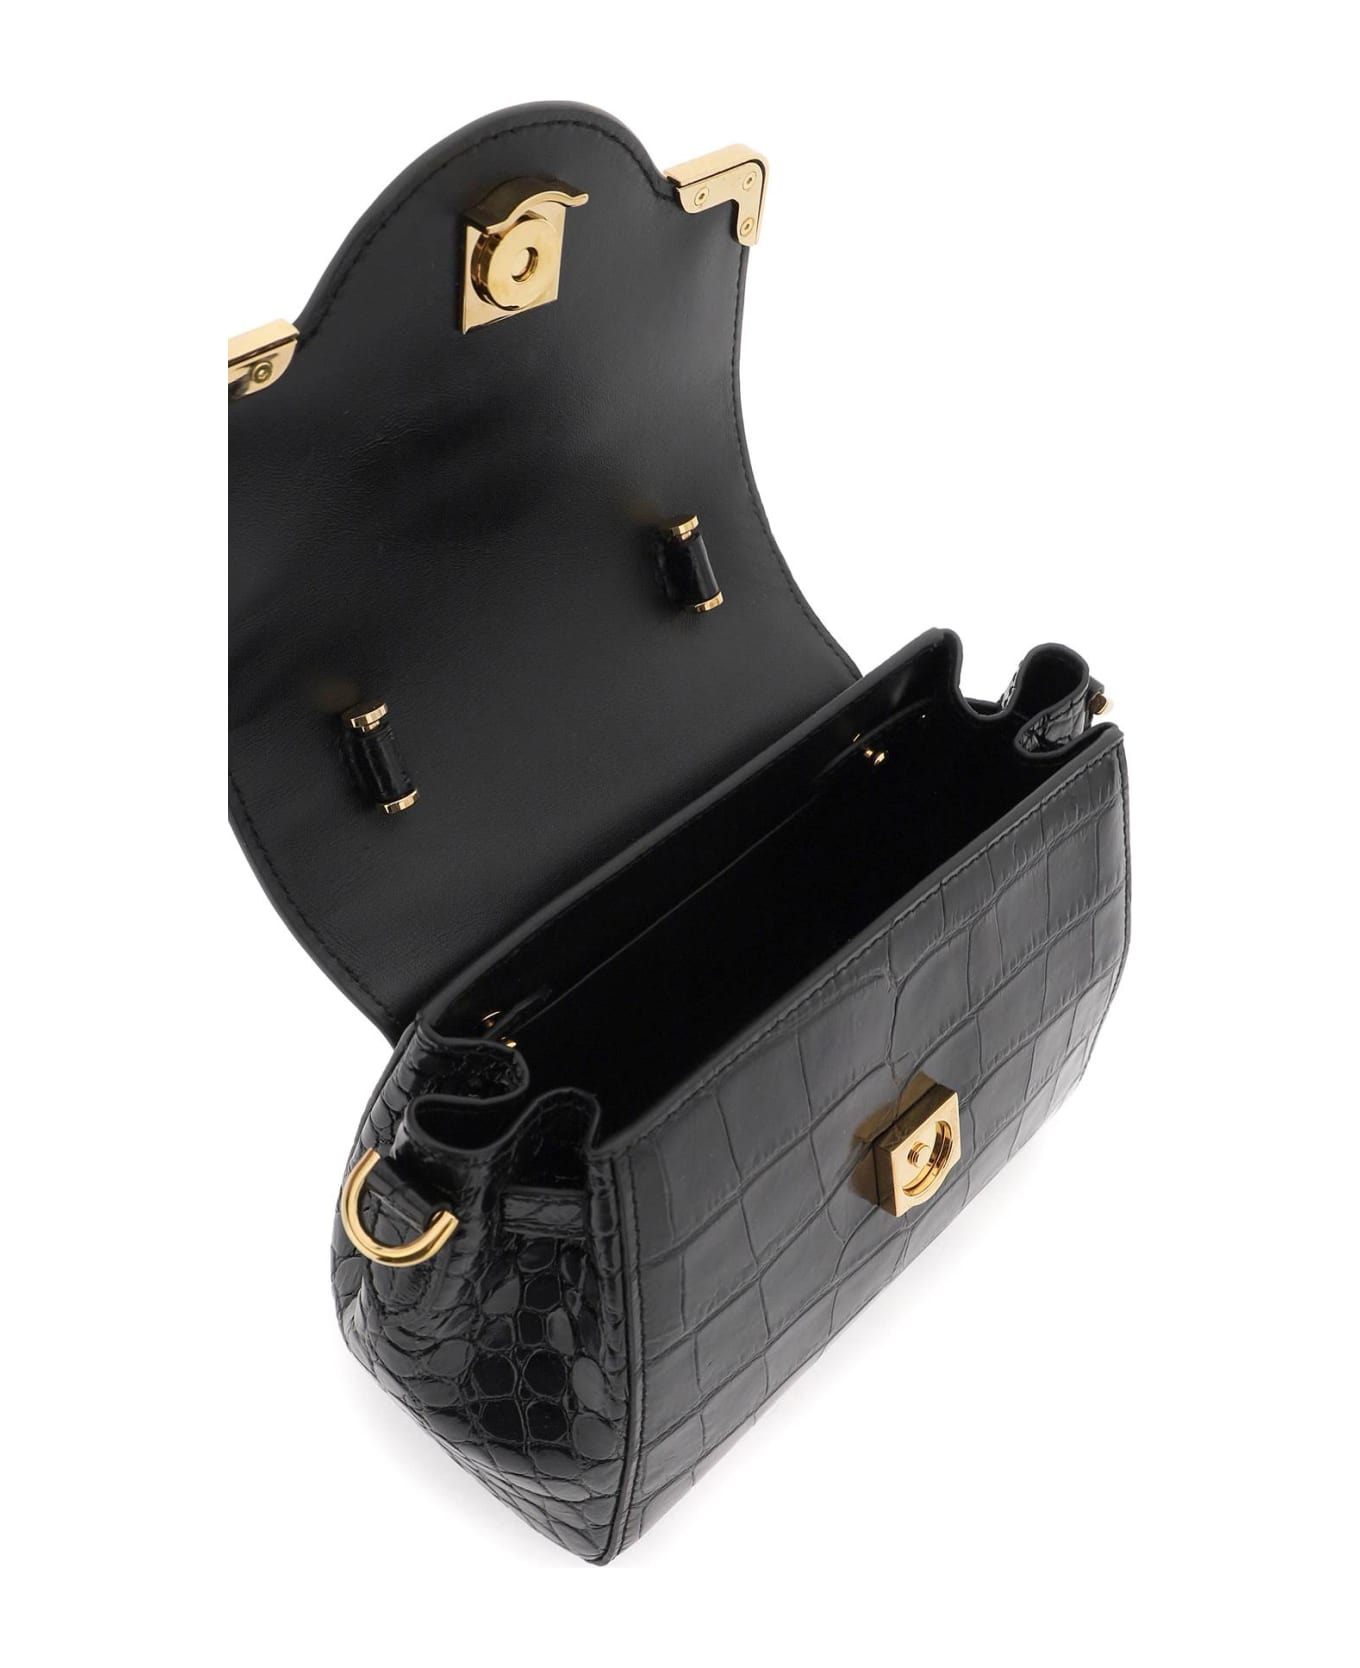 Versace Small Handbag 'the Jellyfish' - BLACK VERSACE GOLD (Black)